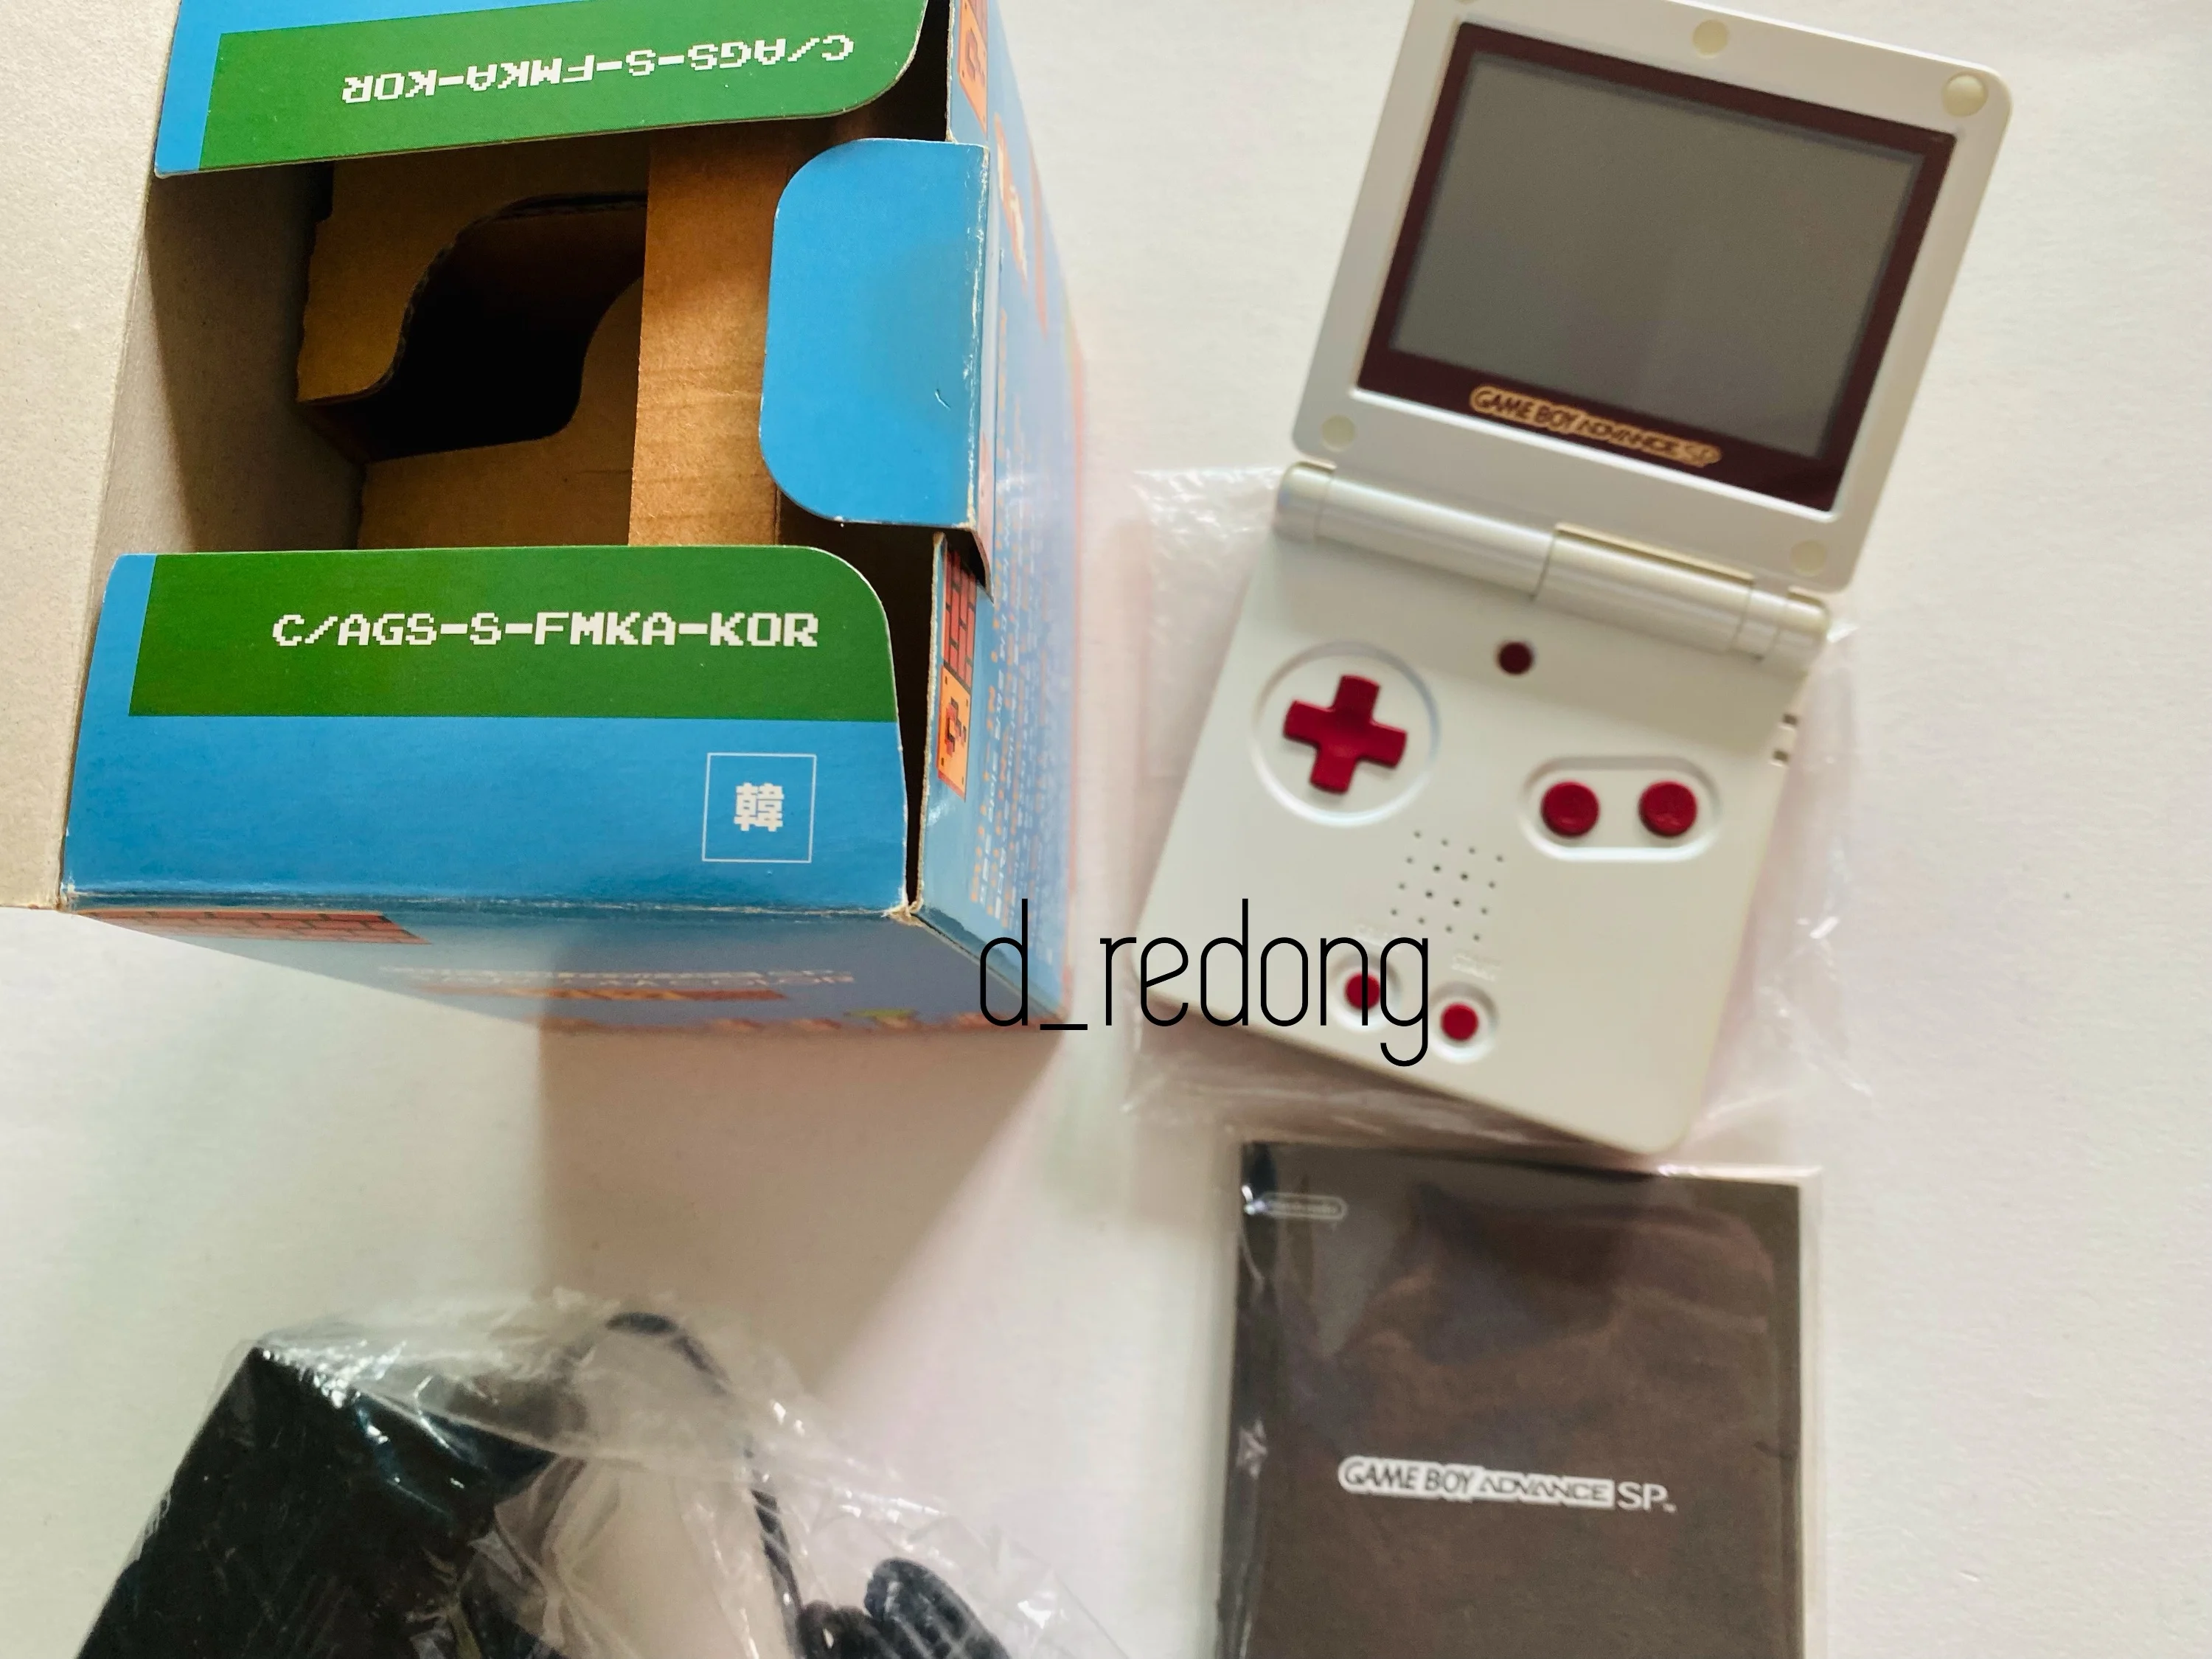 Nintendo Game Boy Advance SP Famicom Console [KOR] - Consolevariations